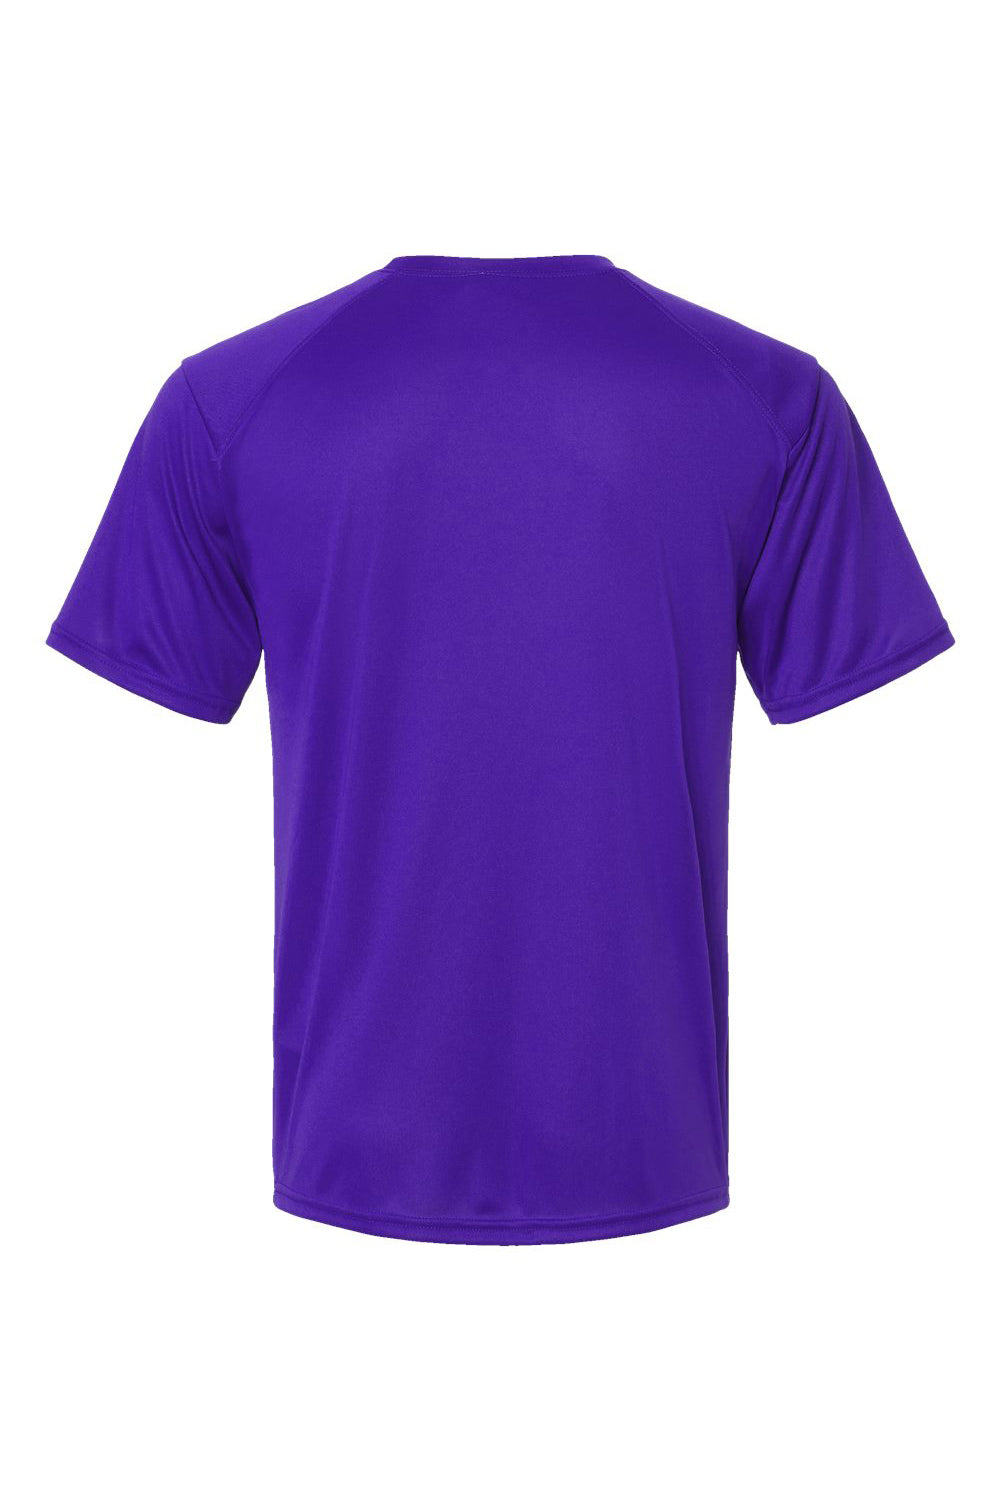 Paragon 200 Mens Islander Performance Short Sleeve Crewneck T-Shirt Purple Flat Back